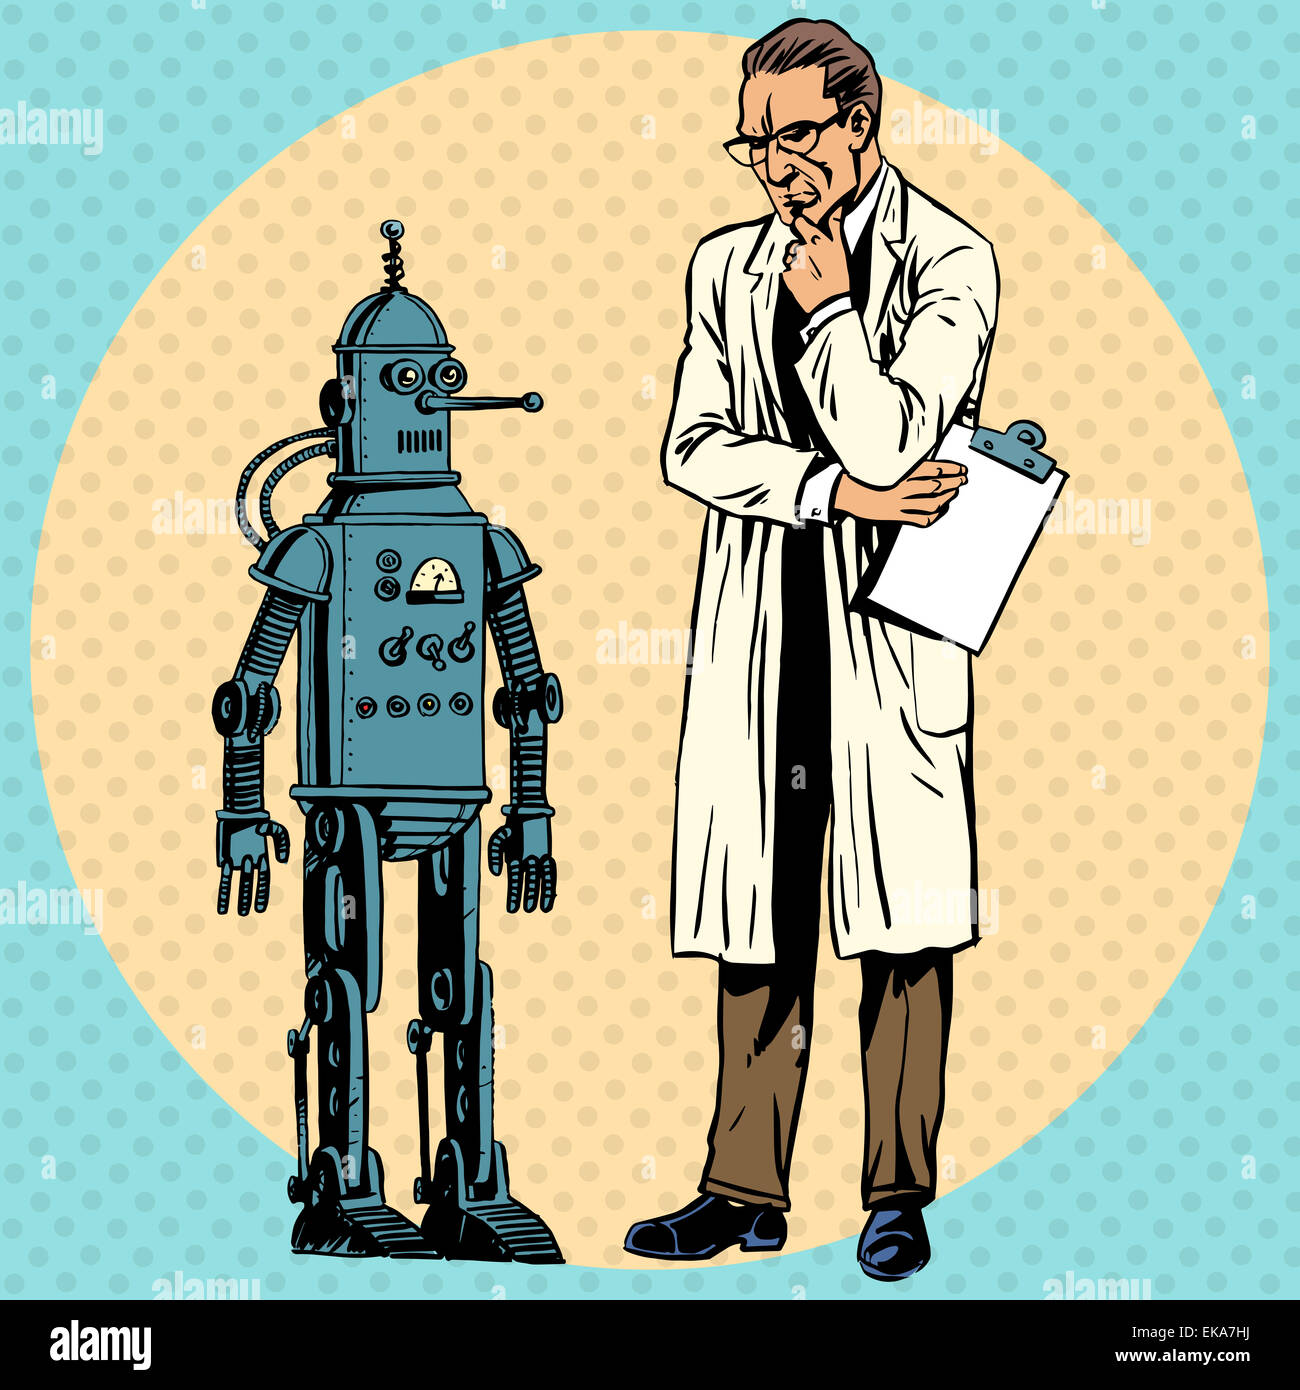 Professor scientist and robot. Creator gadget retro technology Stock Photo